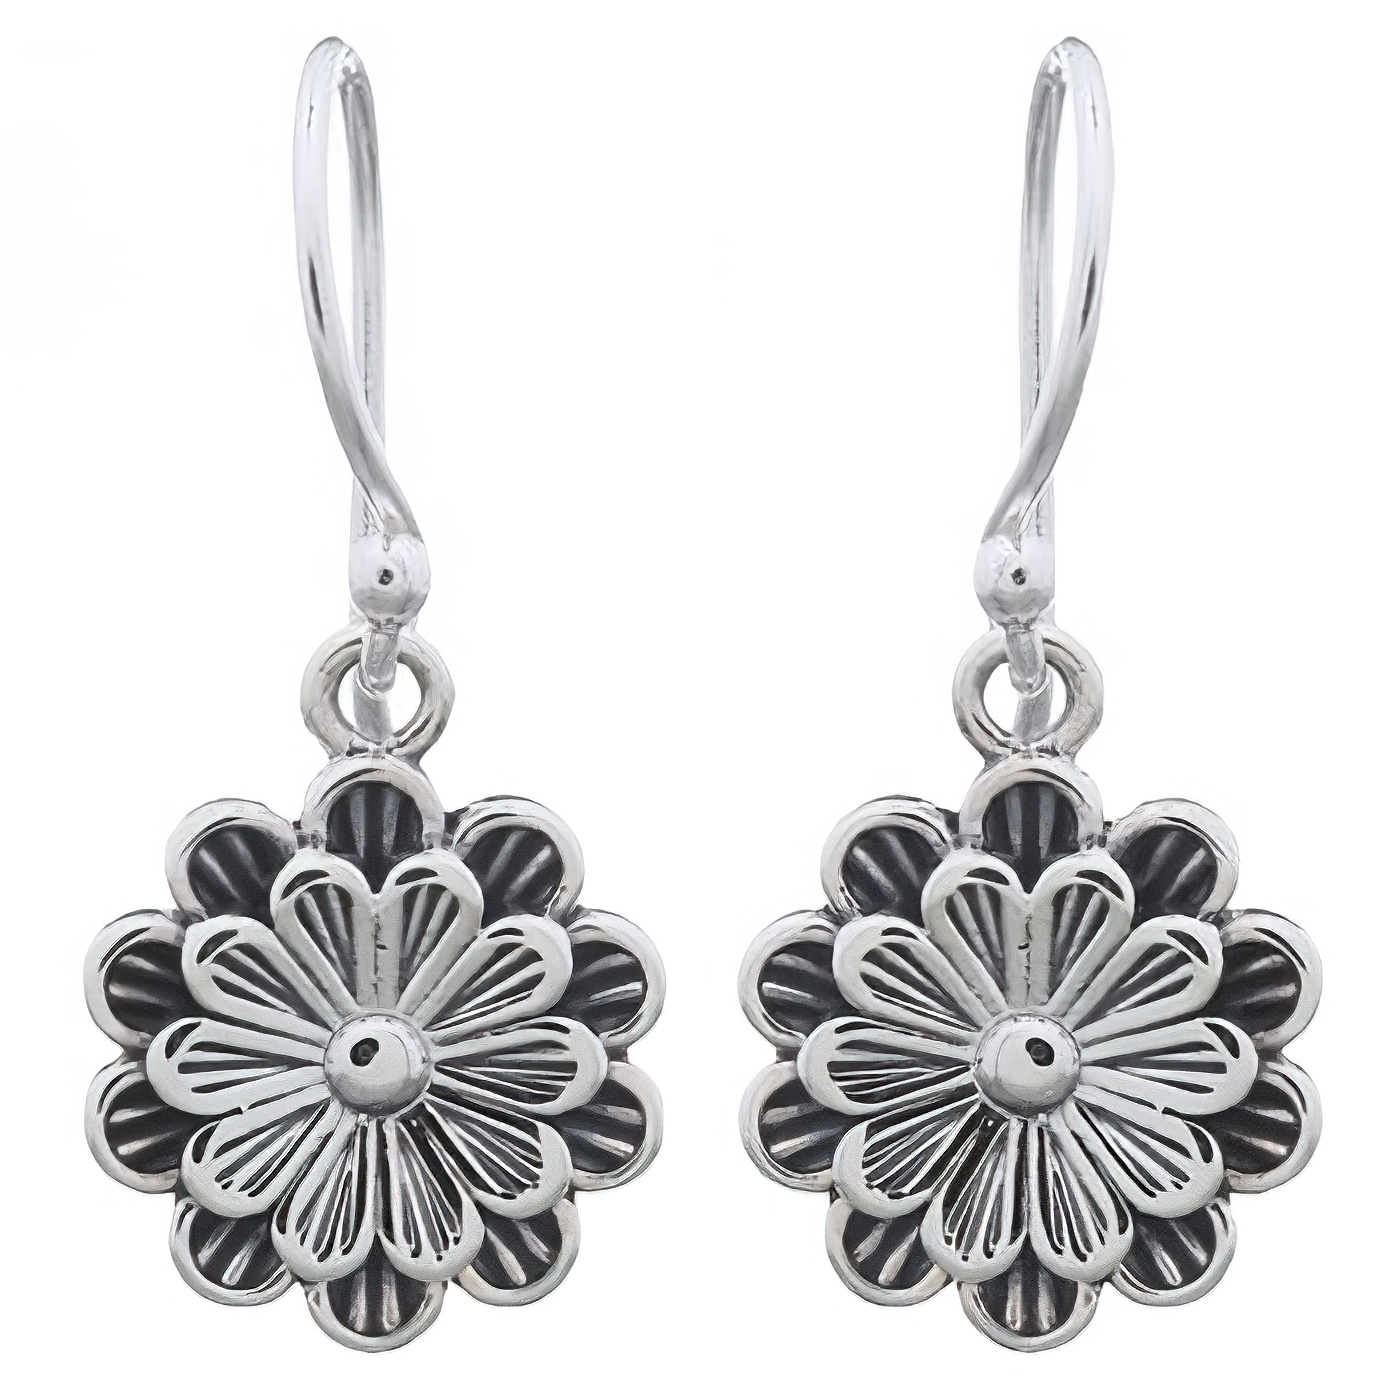 Lovely Ornamented Flower Dangle Sterling Silver Earrings by BeYindi 